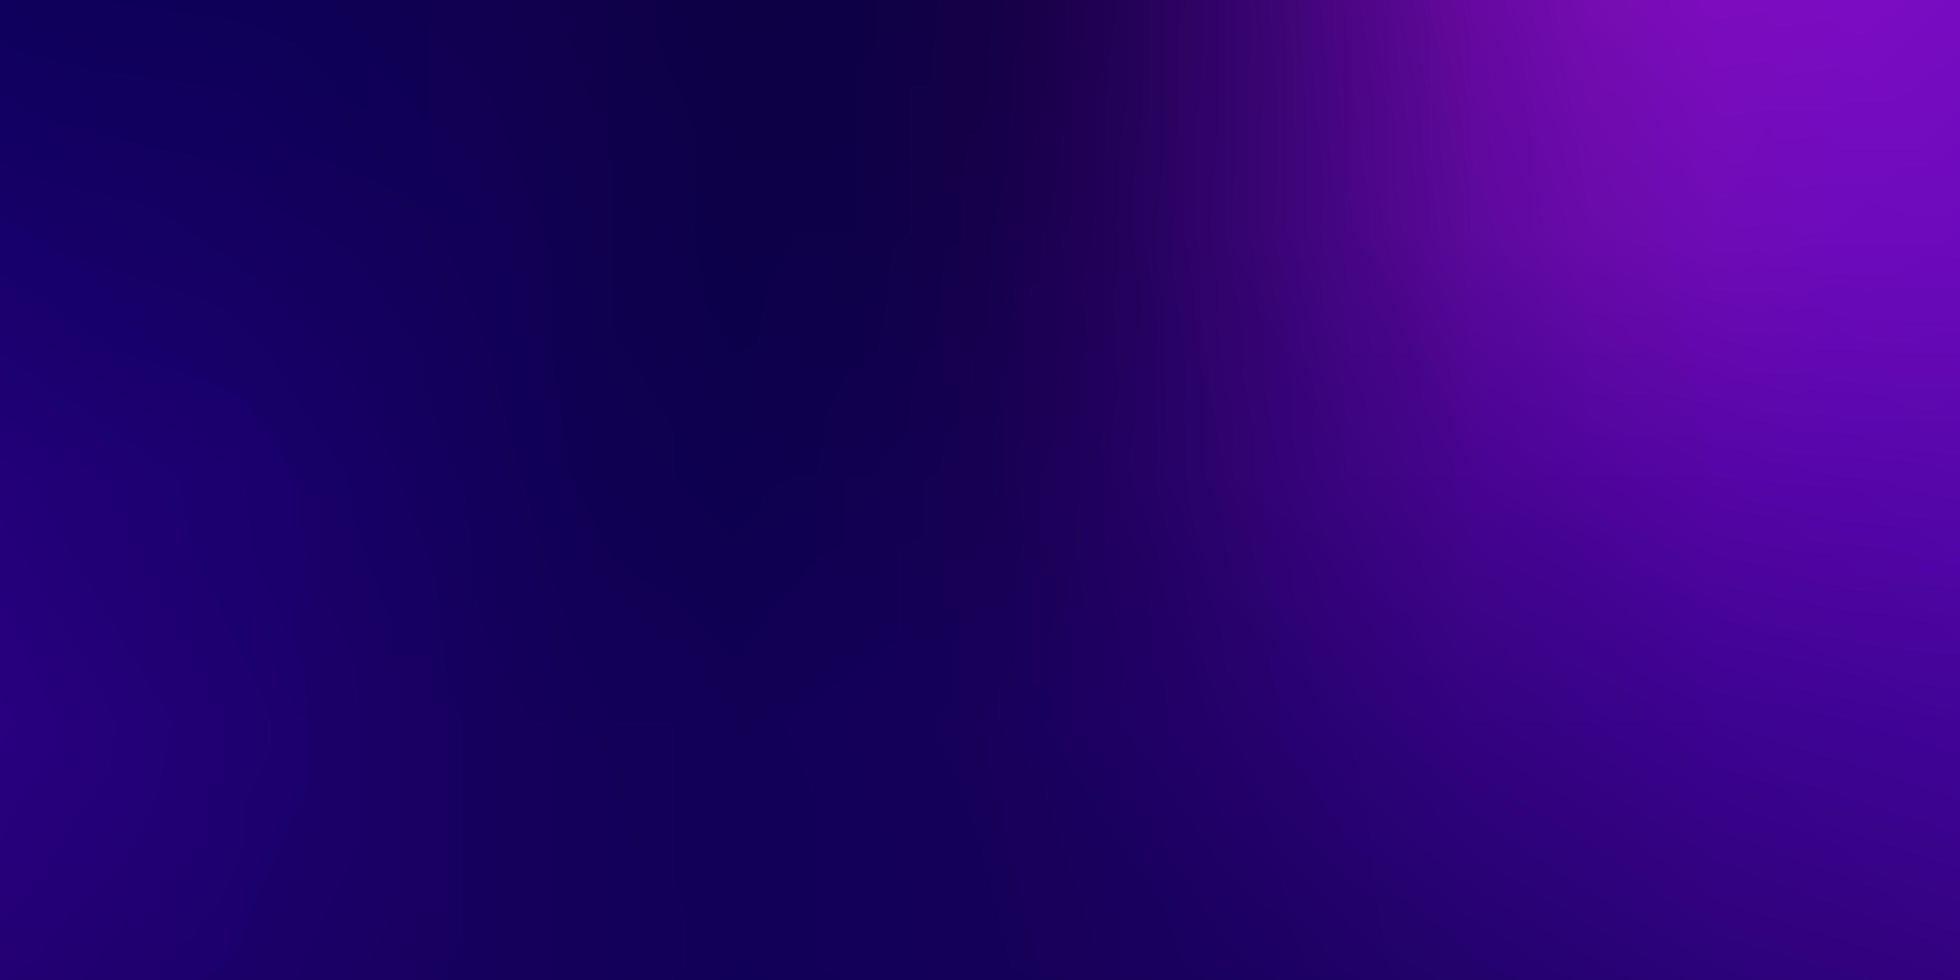 Fondo borroso abstracto del vector púrpura, rosado oscuro.